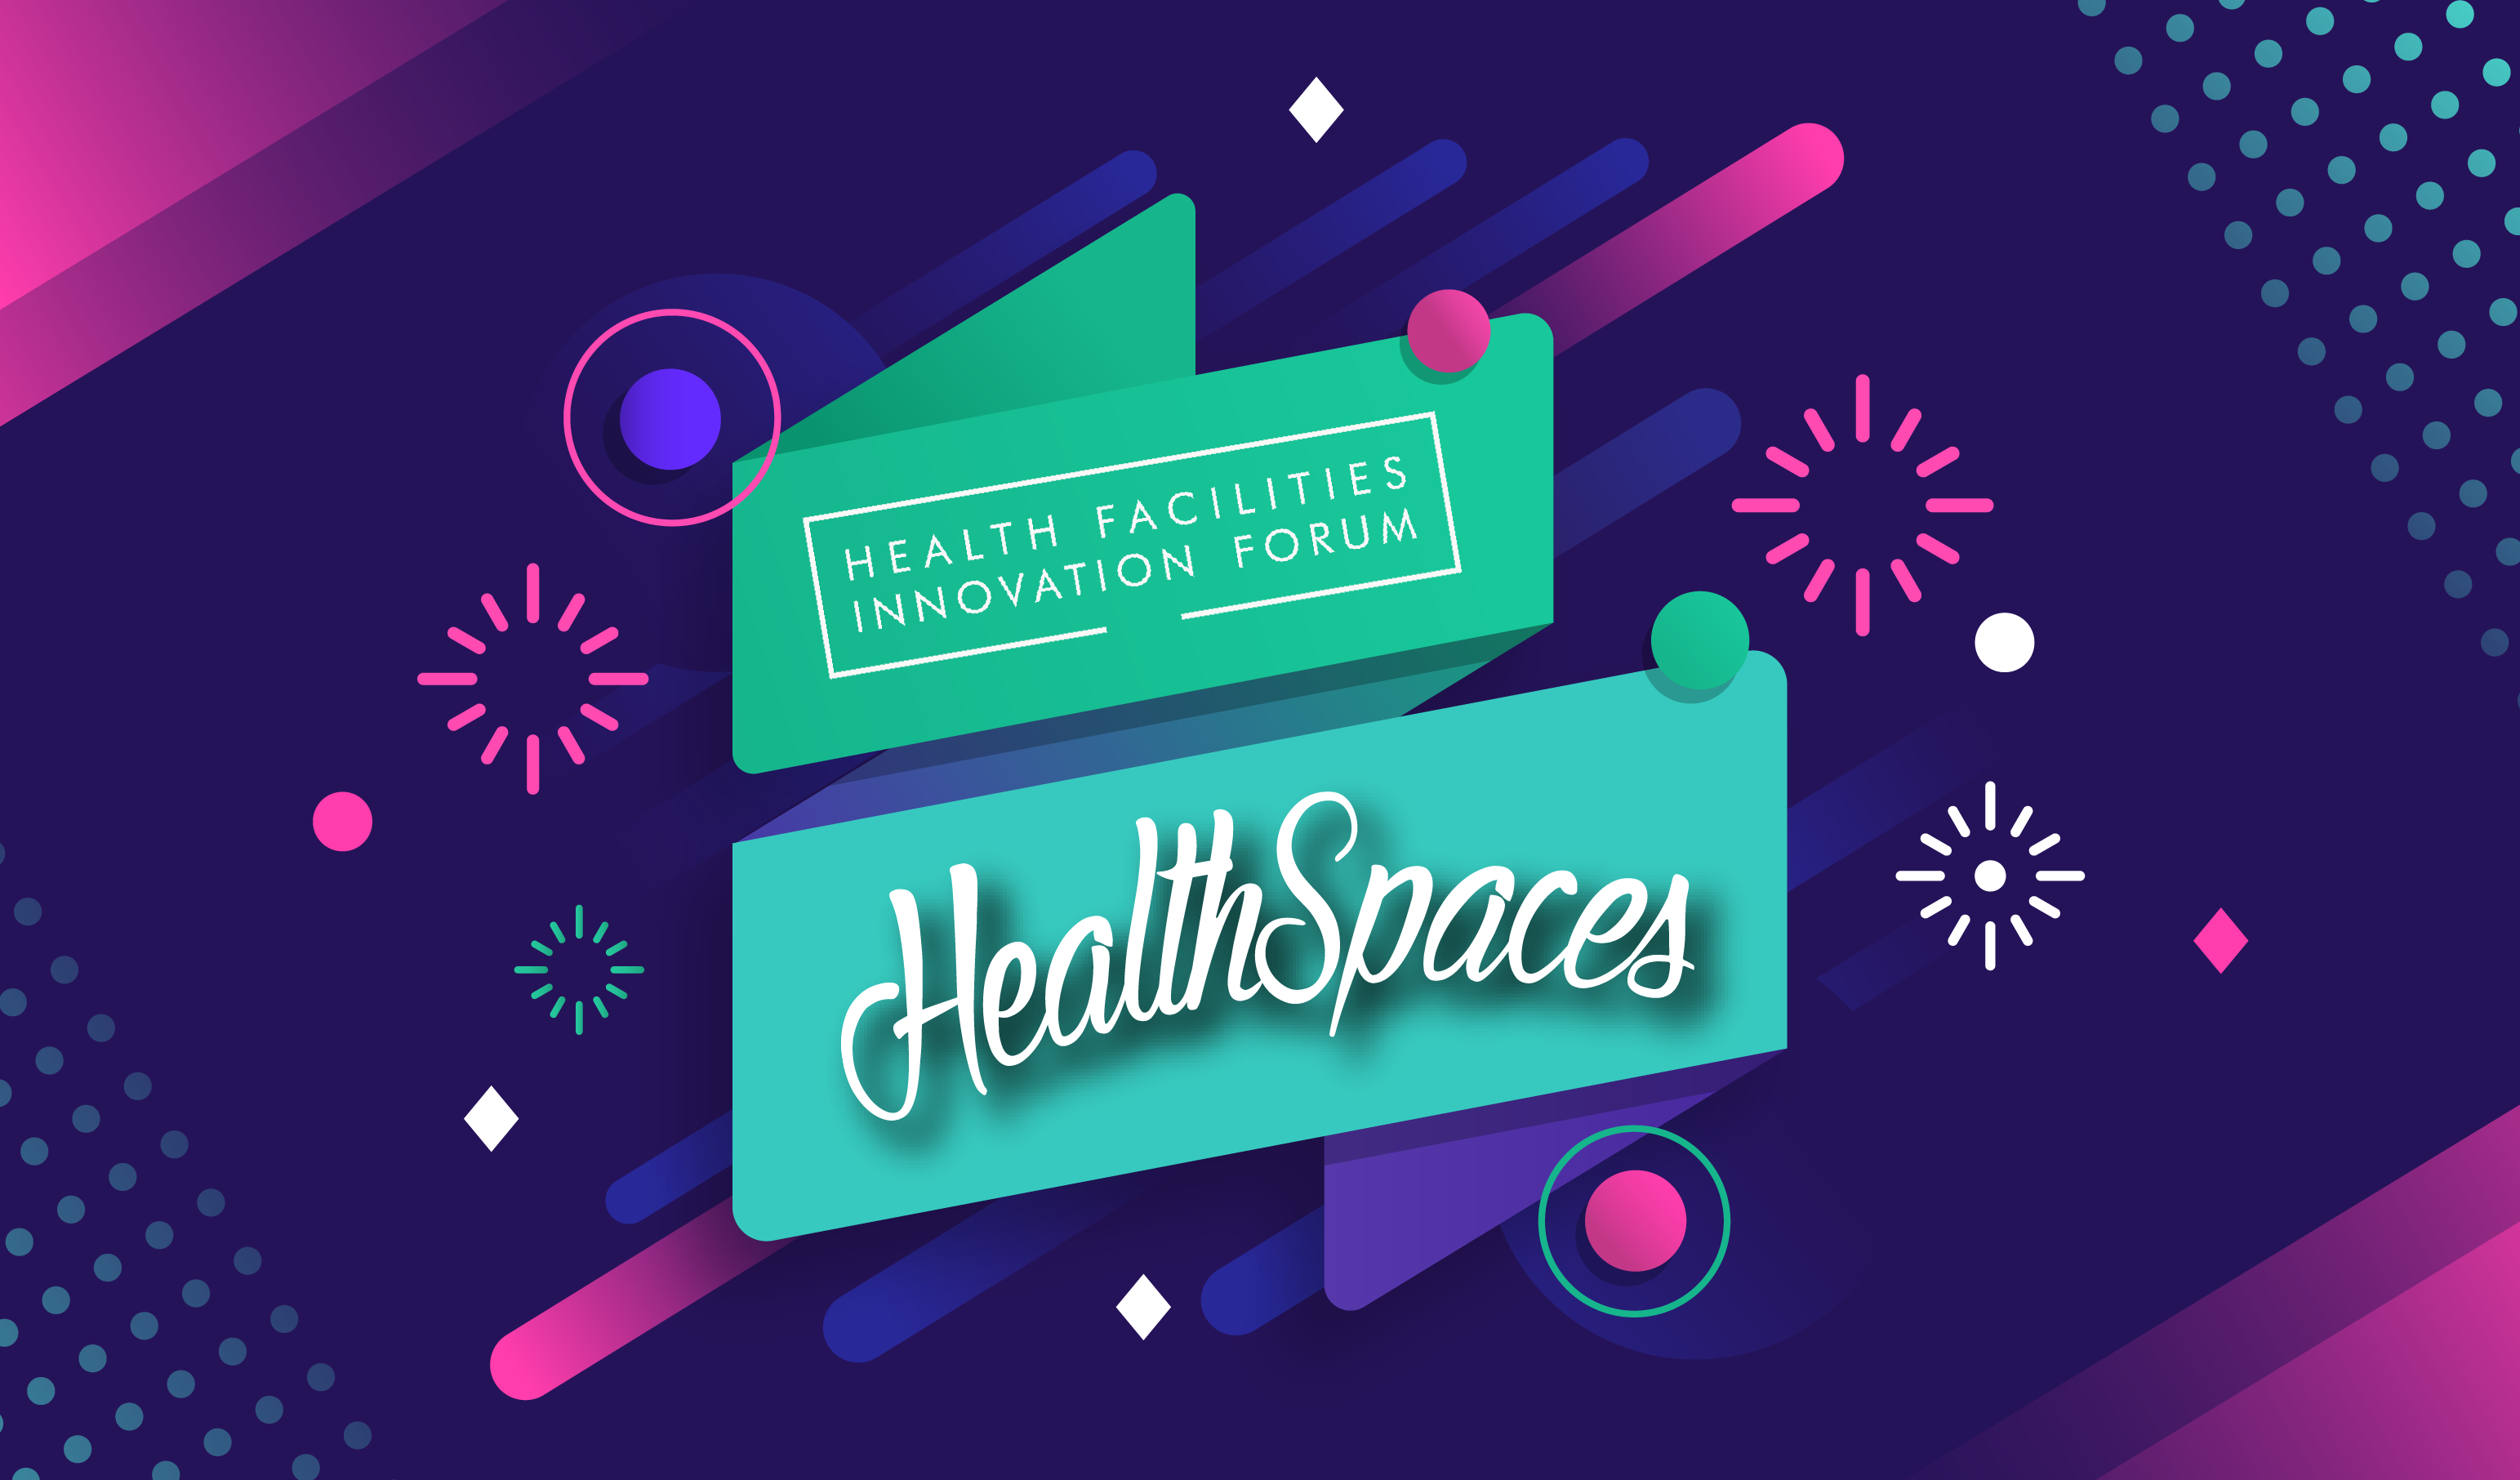 Health Facilities Innovation Forum Rebrands to HealthSpaces